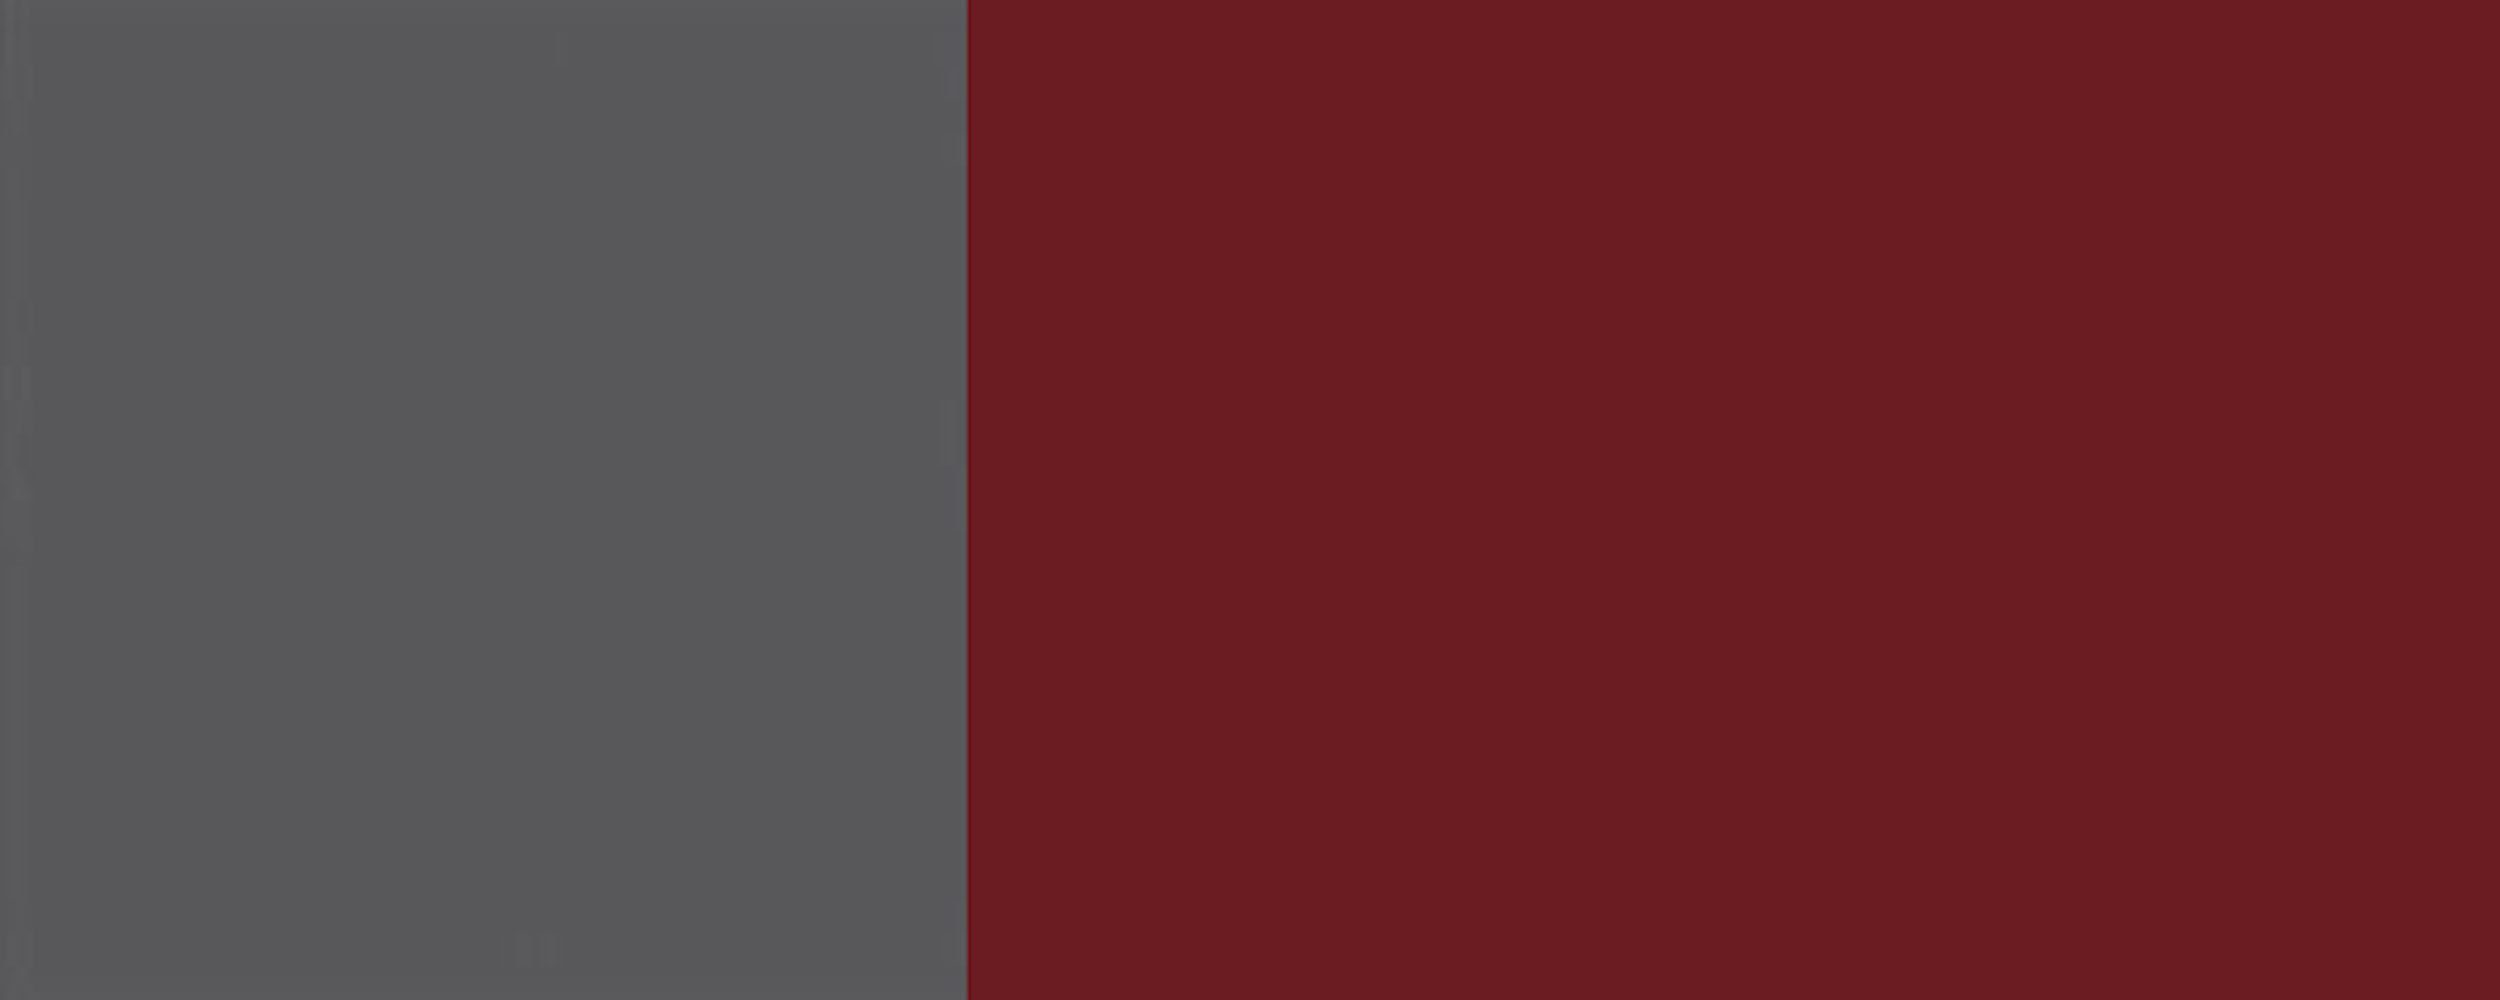 1-türig Feldmann-Wohnen purpurrot und matt Korpusfarbe wählbar Rimini 60cm 3004 Klapphängeschrank (Rimini) Front- RAL